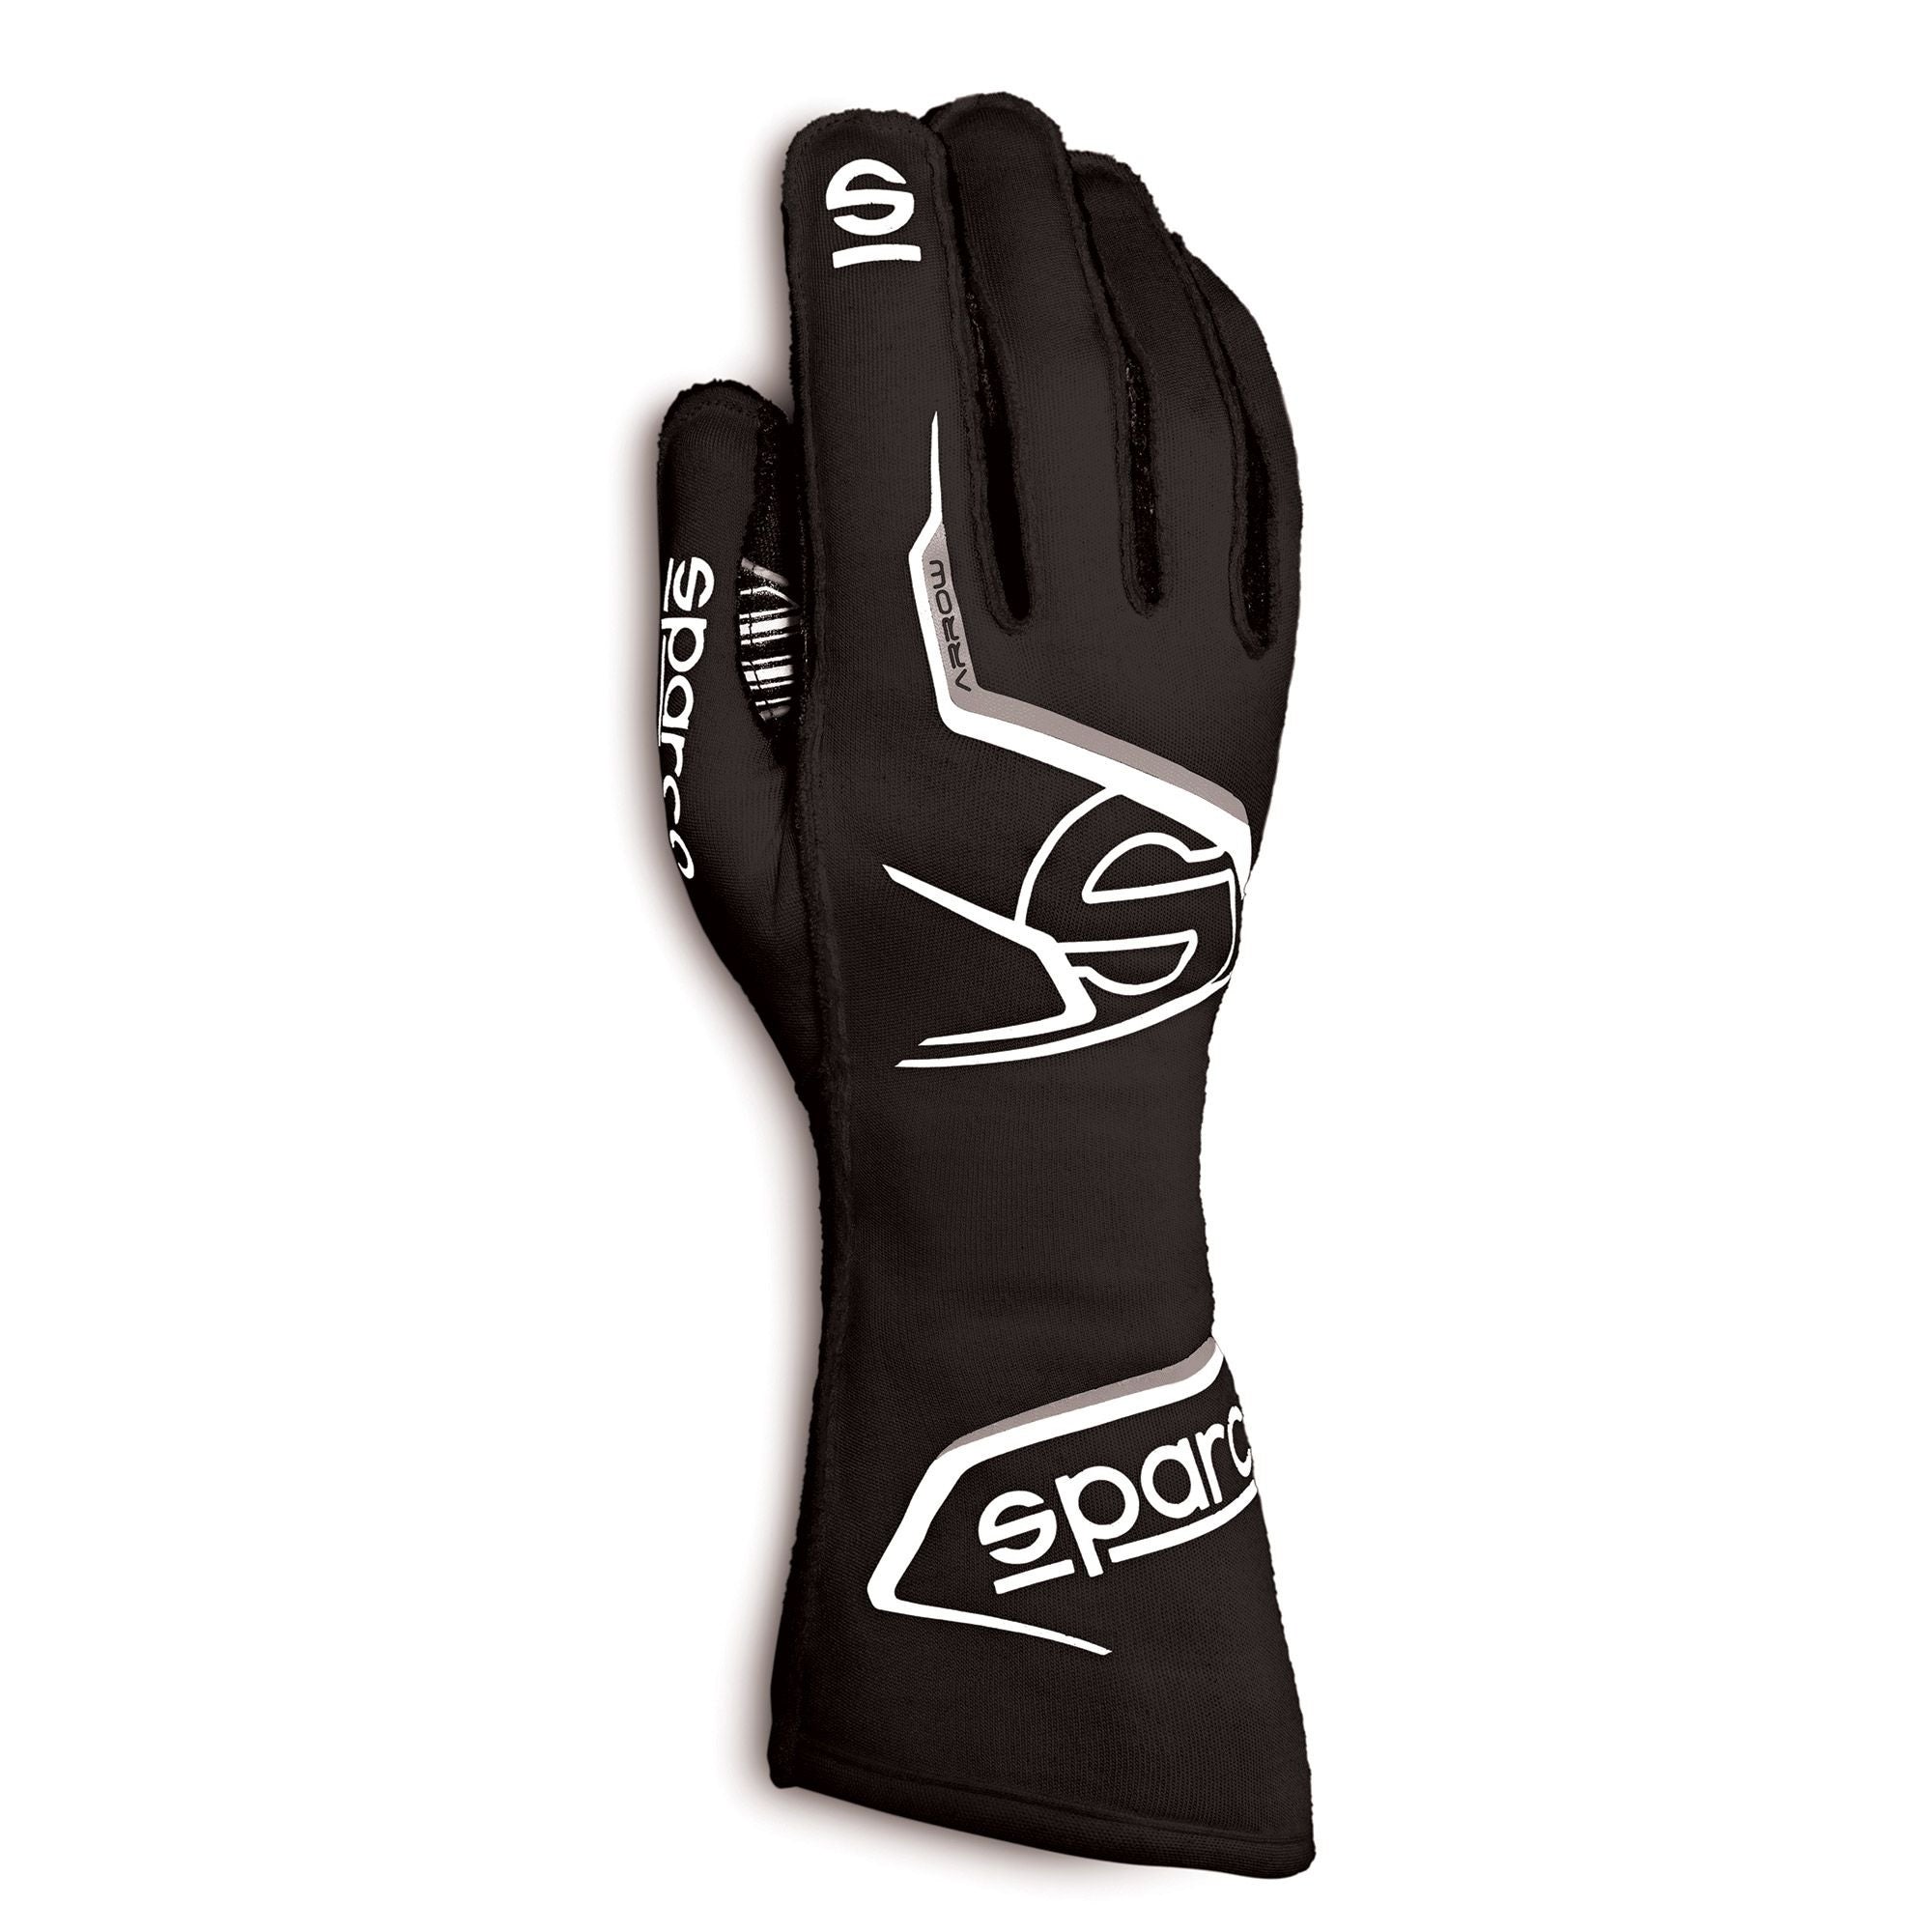 Sparco Arrow K Kart Racing Gloves Size 10 Medium - White/Black -  00255710BINR